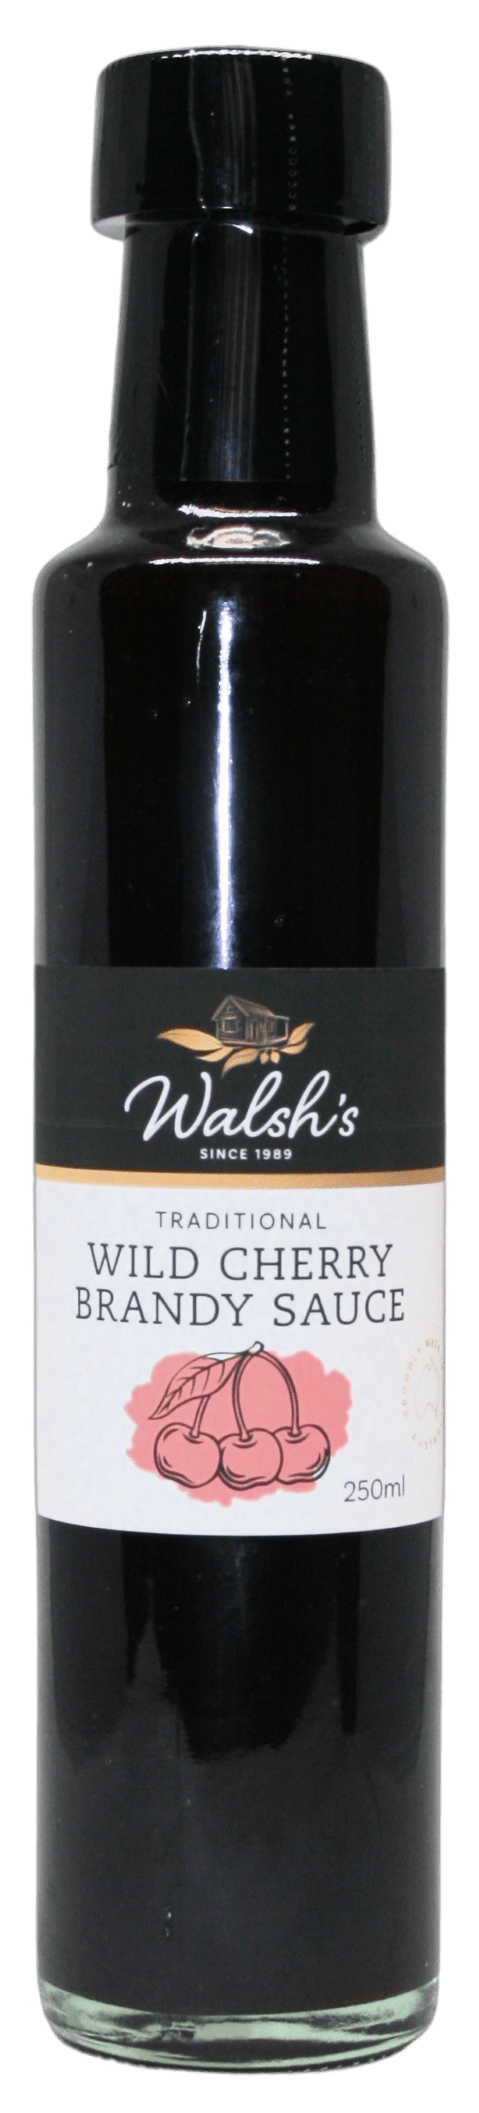 Walshs Wild Cherry Brandy Sauce